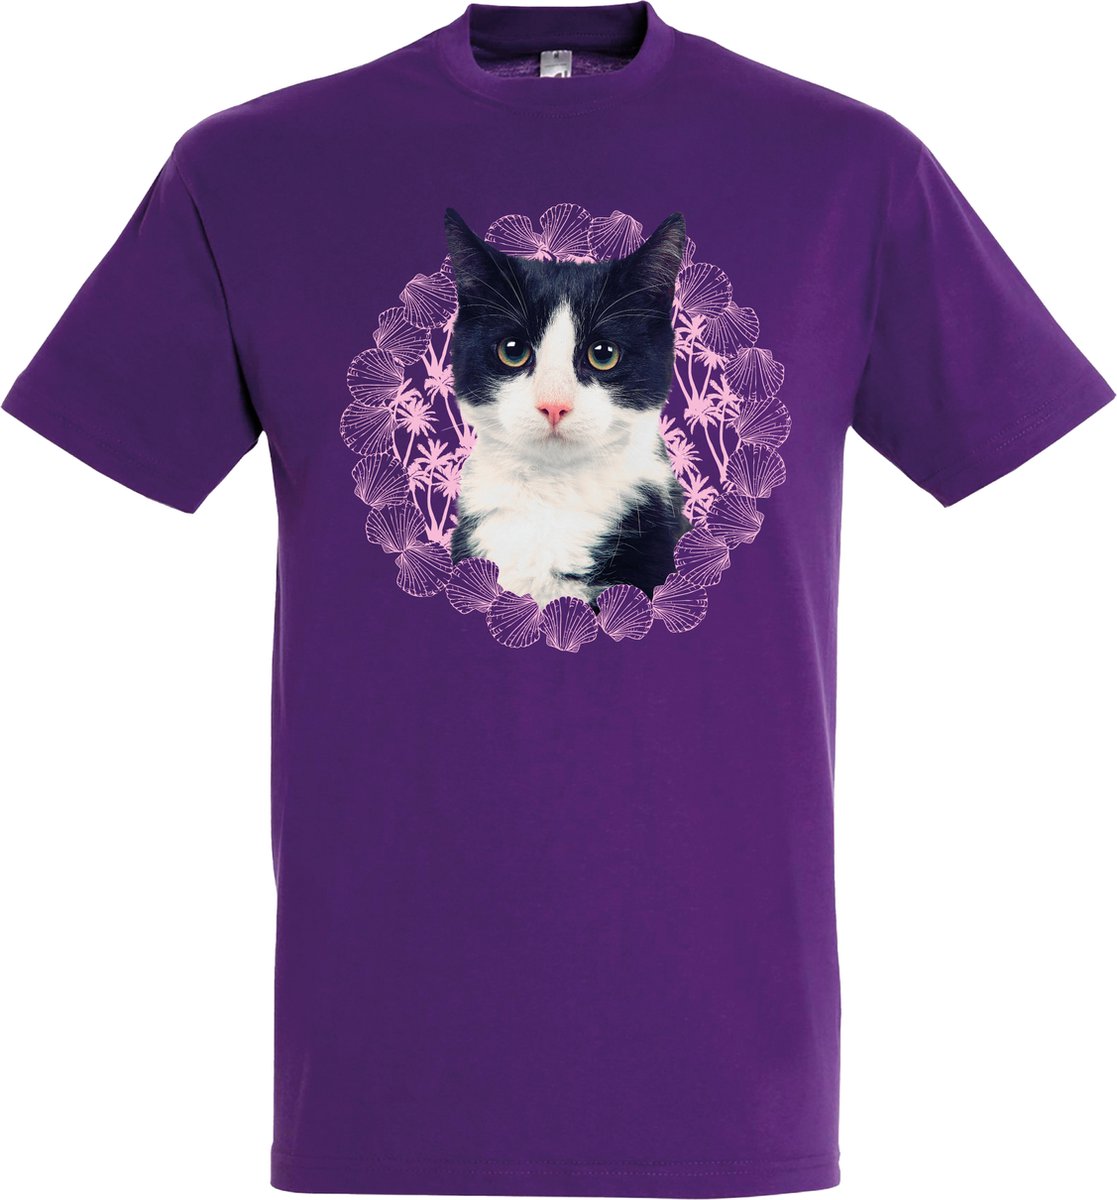 Plenty Gifts T-shirt Black & White Cat Dark Purple XS